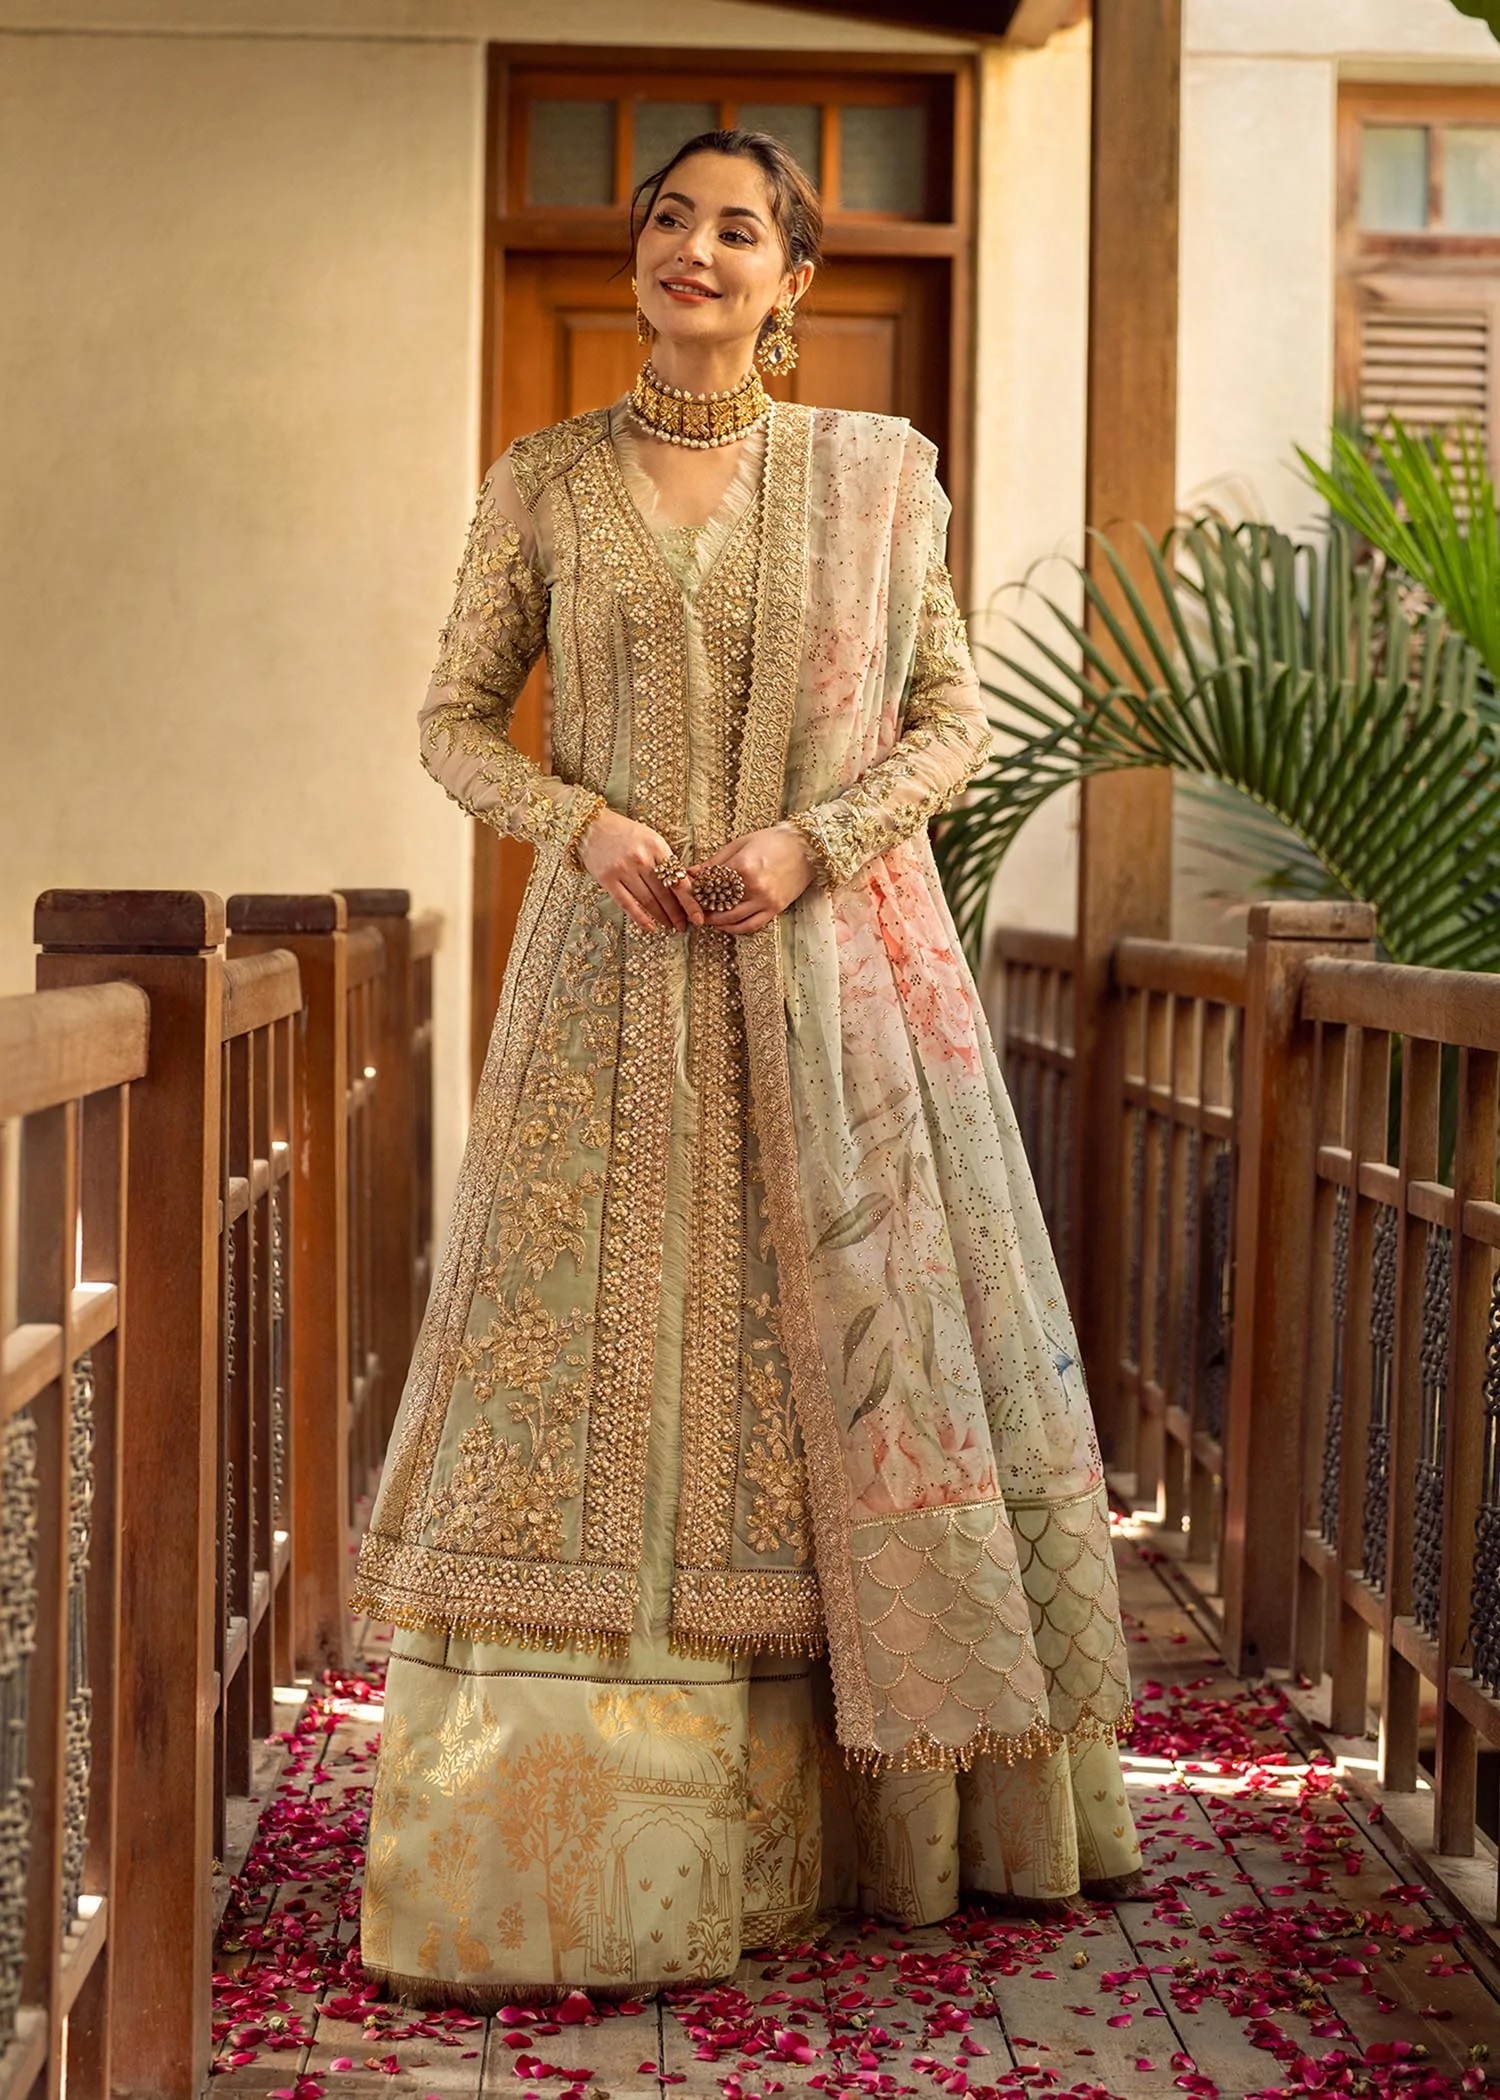 Details more than 124 peshwa dress for wedding